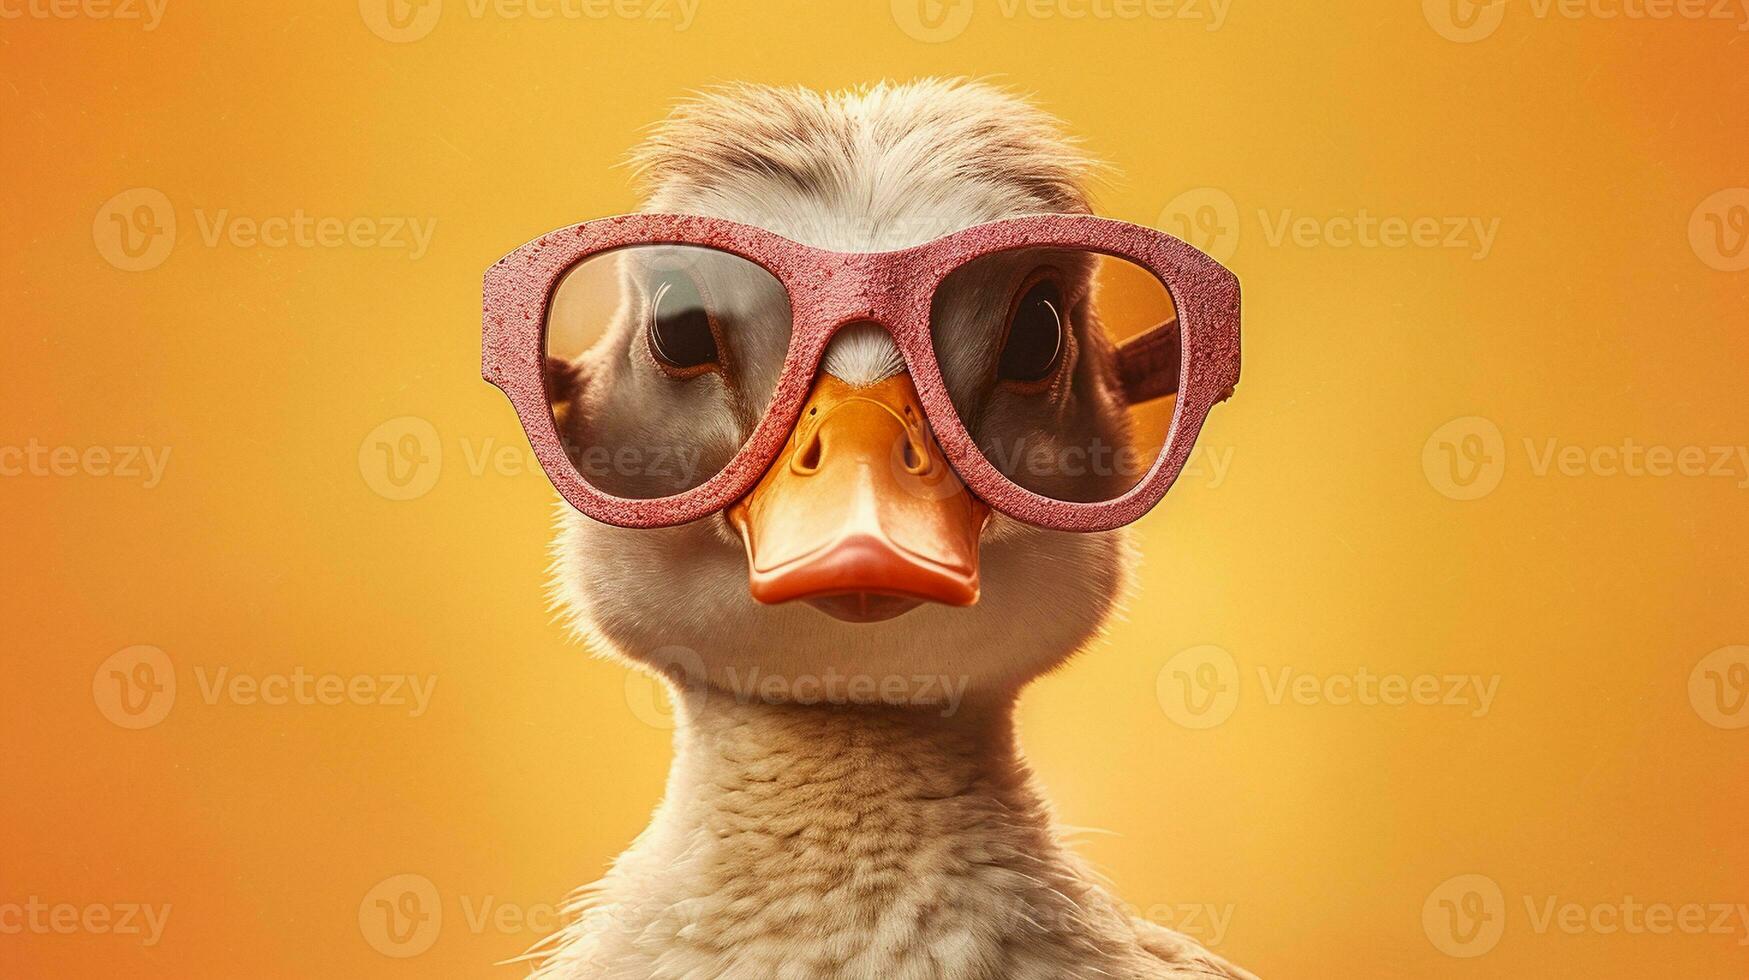 generativ ai, cool Ente ein quacksalber Sommer- Stimmung foto